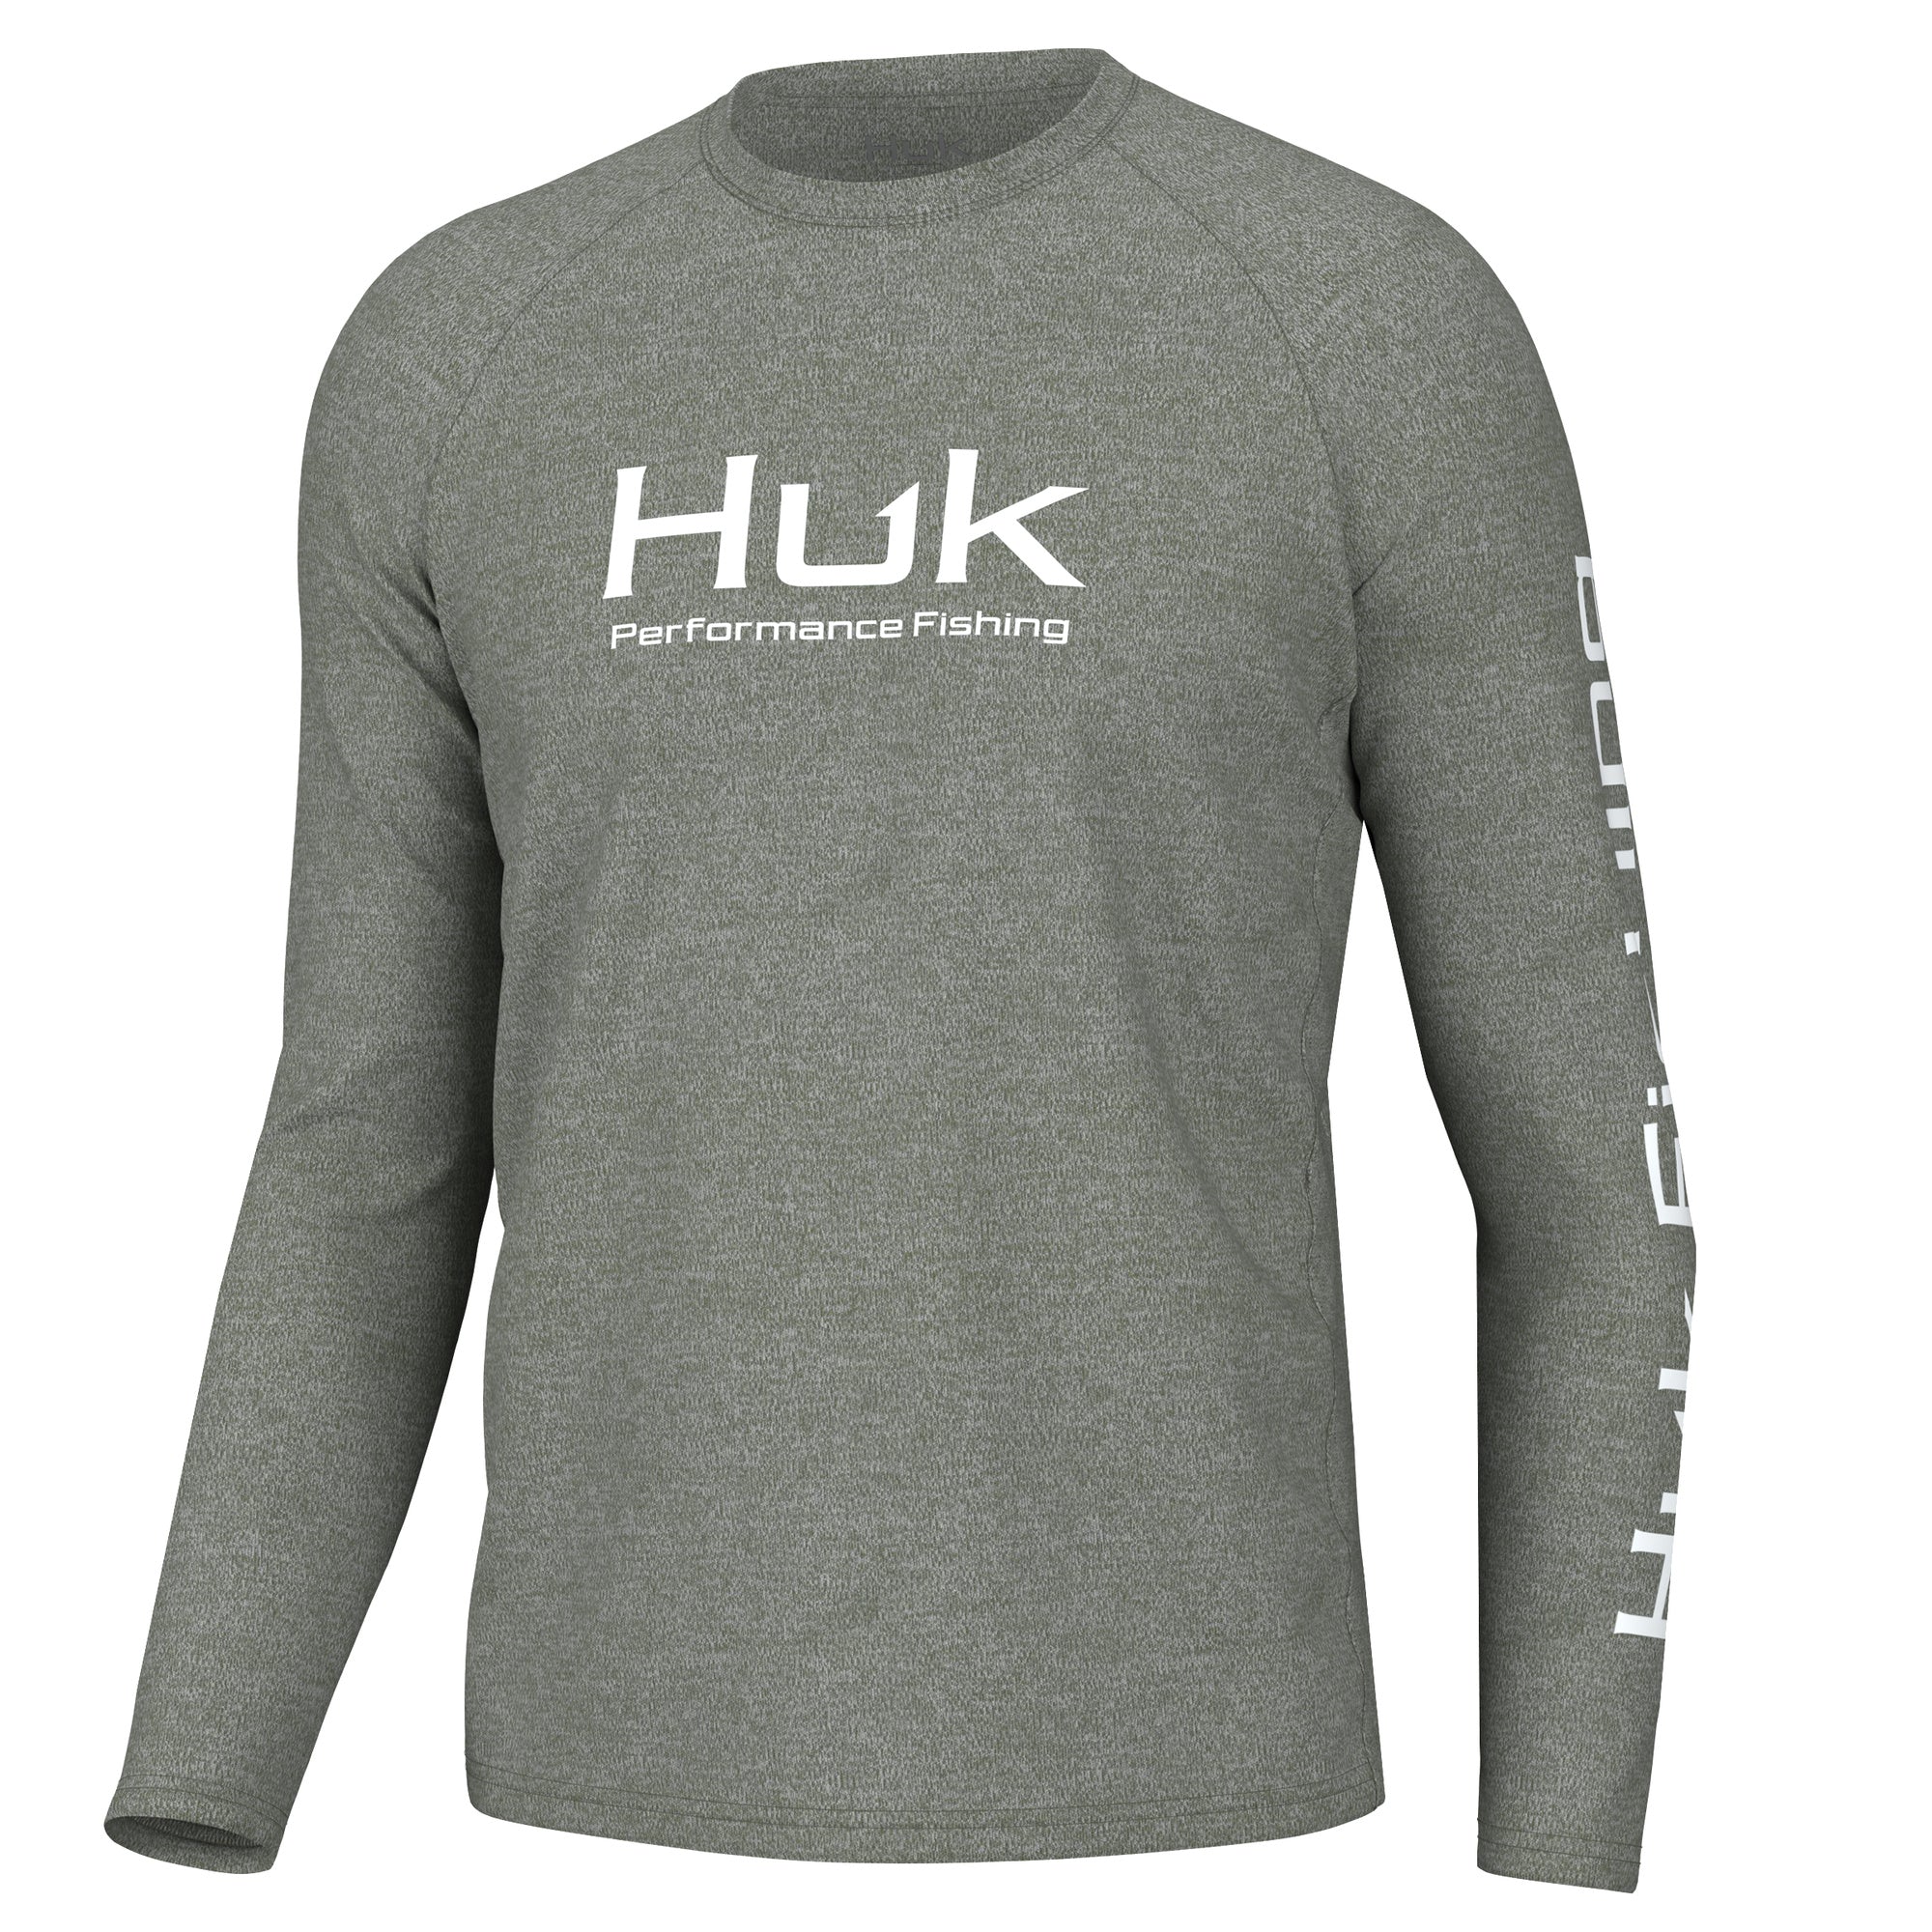 Huk Shirt Mens Medium Gray Performance Fishing Long Sleeve Stretch